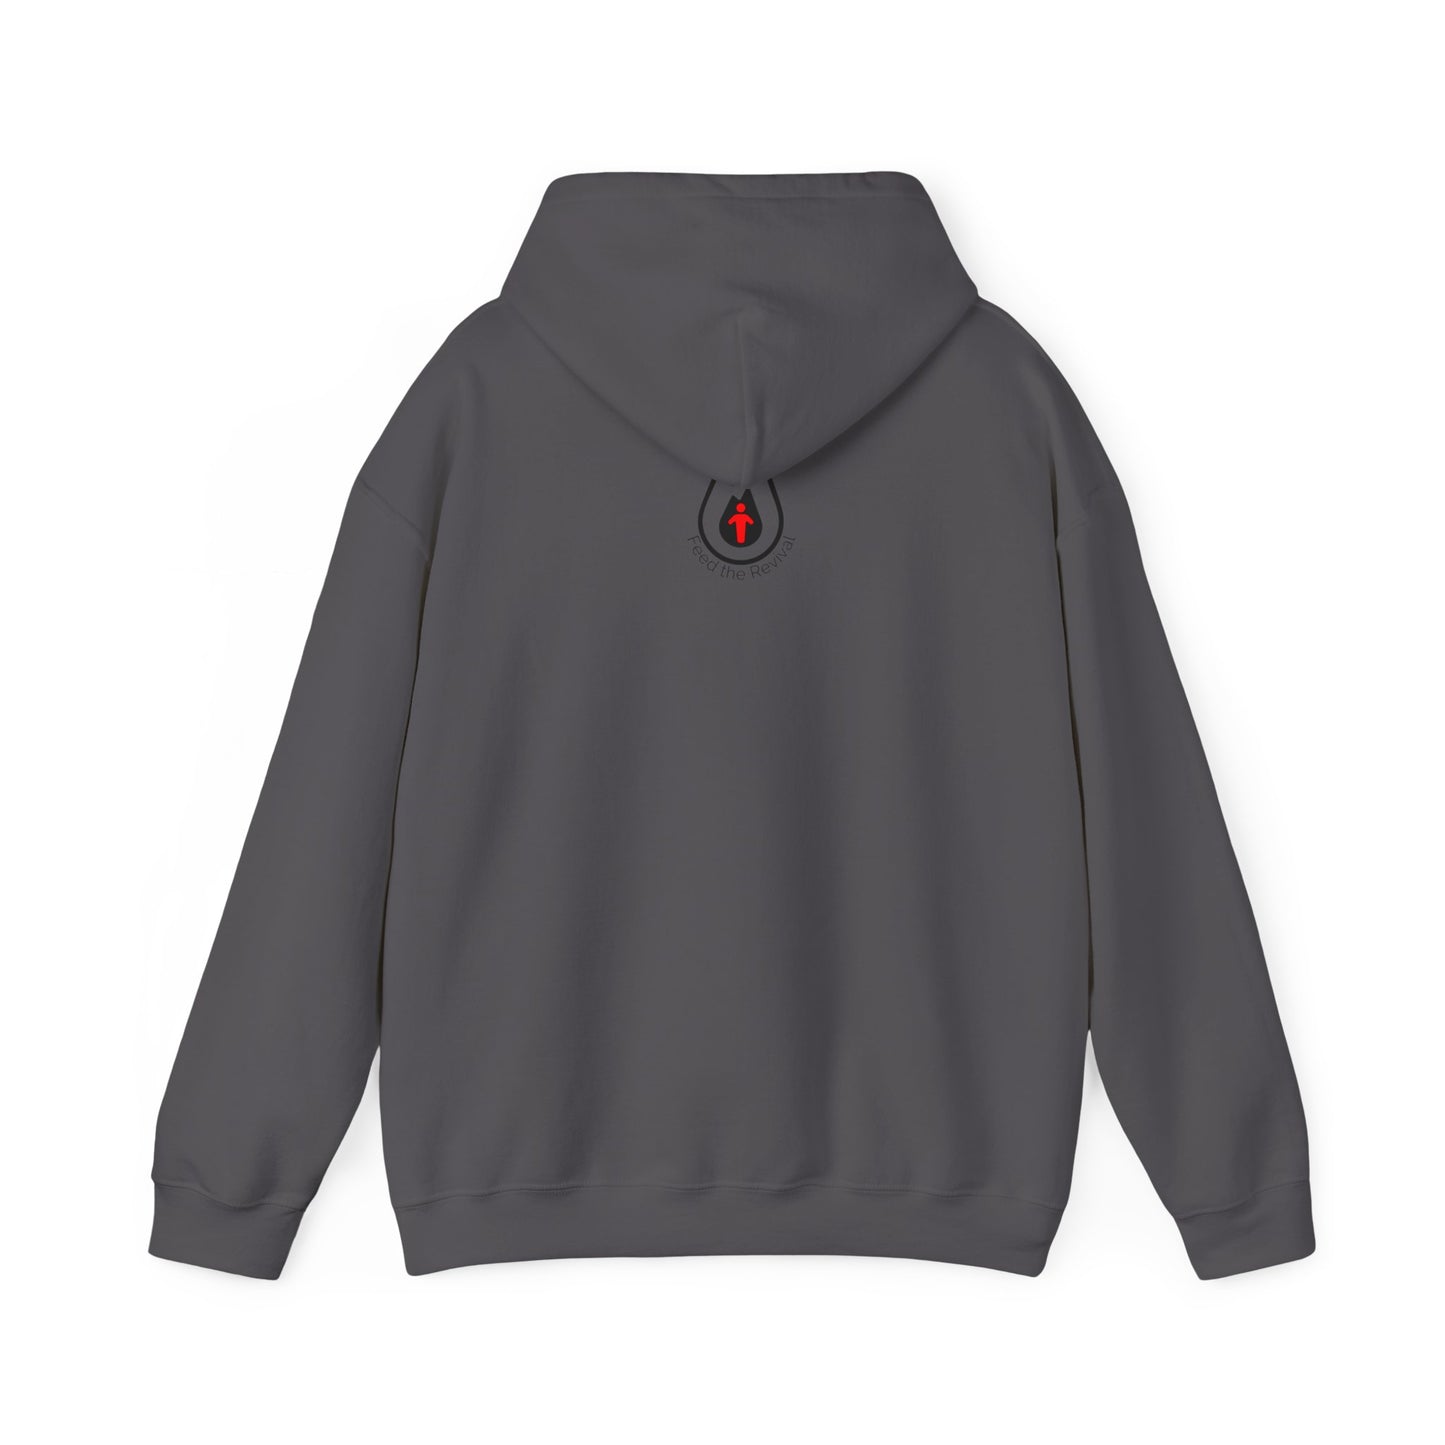 Breathe - Unisex Heavy Blend™ Hooded Sweatshirt